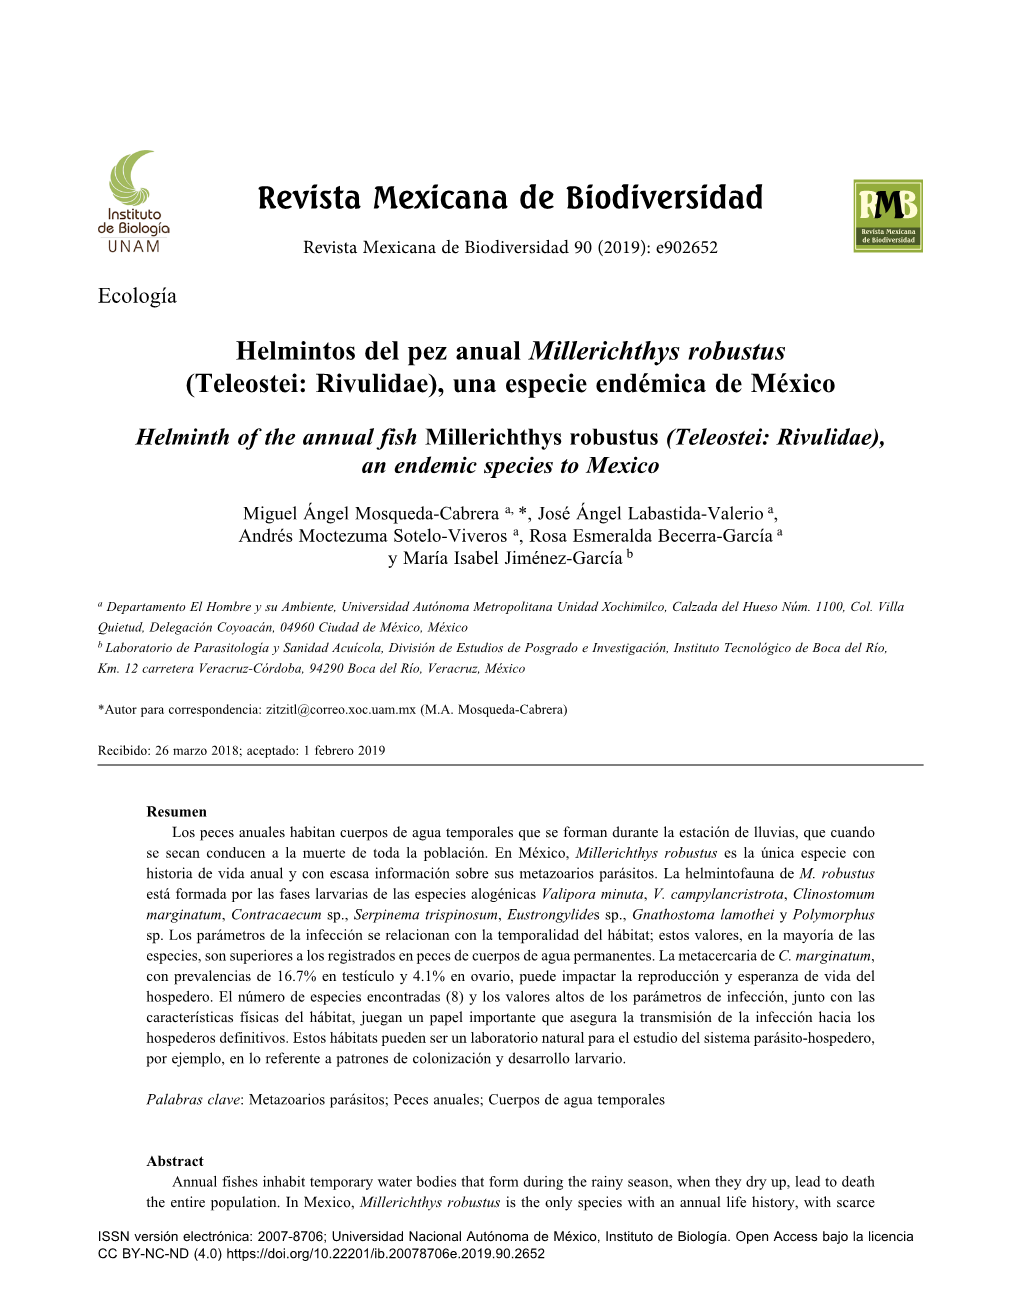 Helmintos Del Pez Anual Millerichthys Robustus (Teleostei: Rivulidae), Una Especie Endémica De México